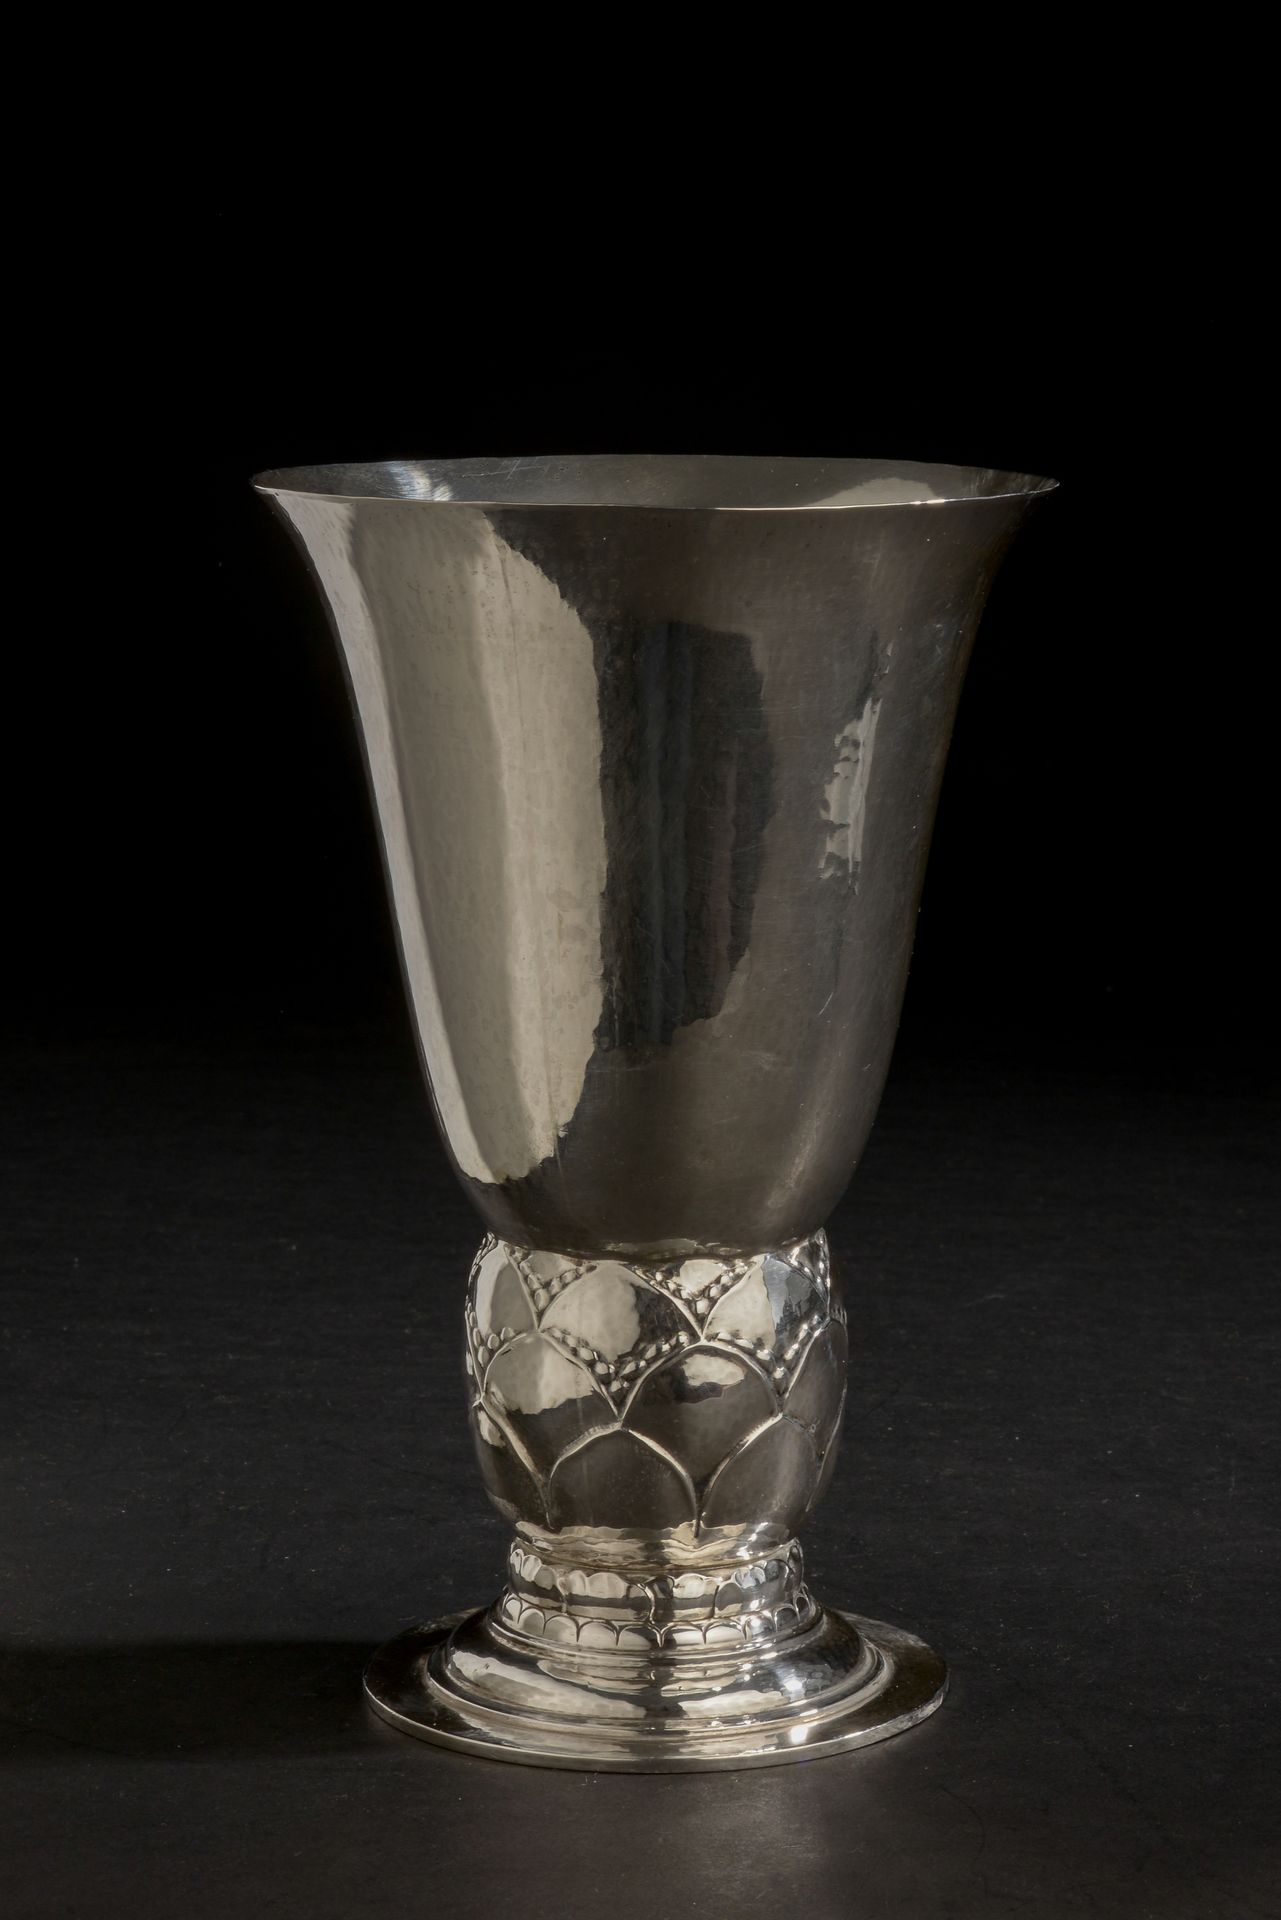 Null Georg JENSEN (Radvad, 1866 - Radvad, 1935).
Vase aus gehämmertem Silber 925&hellip;